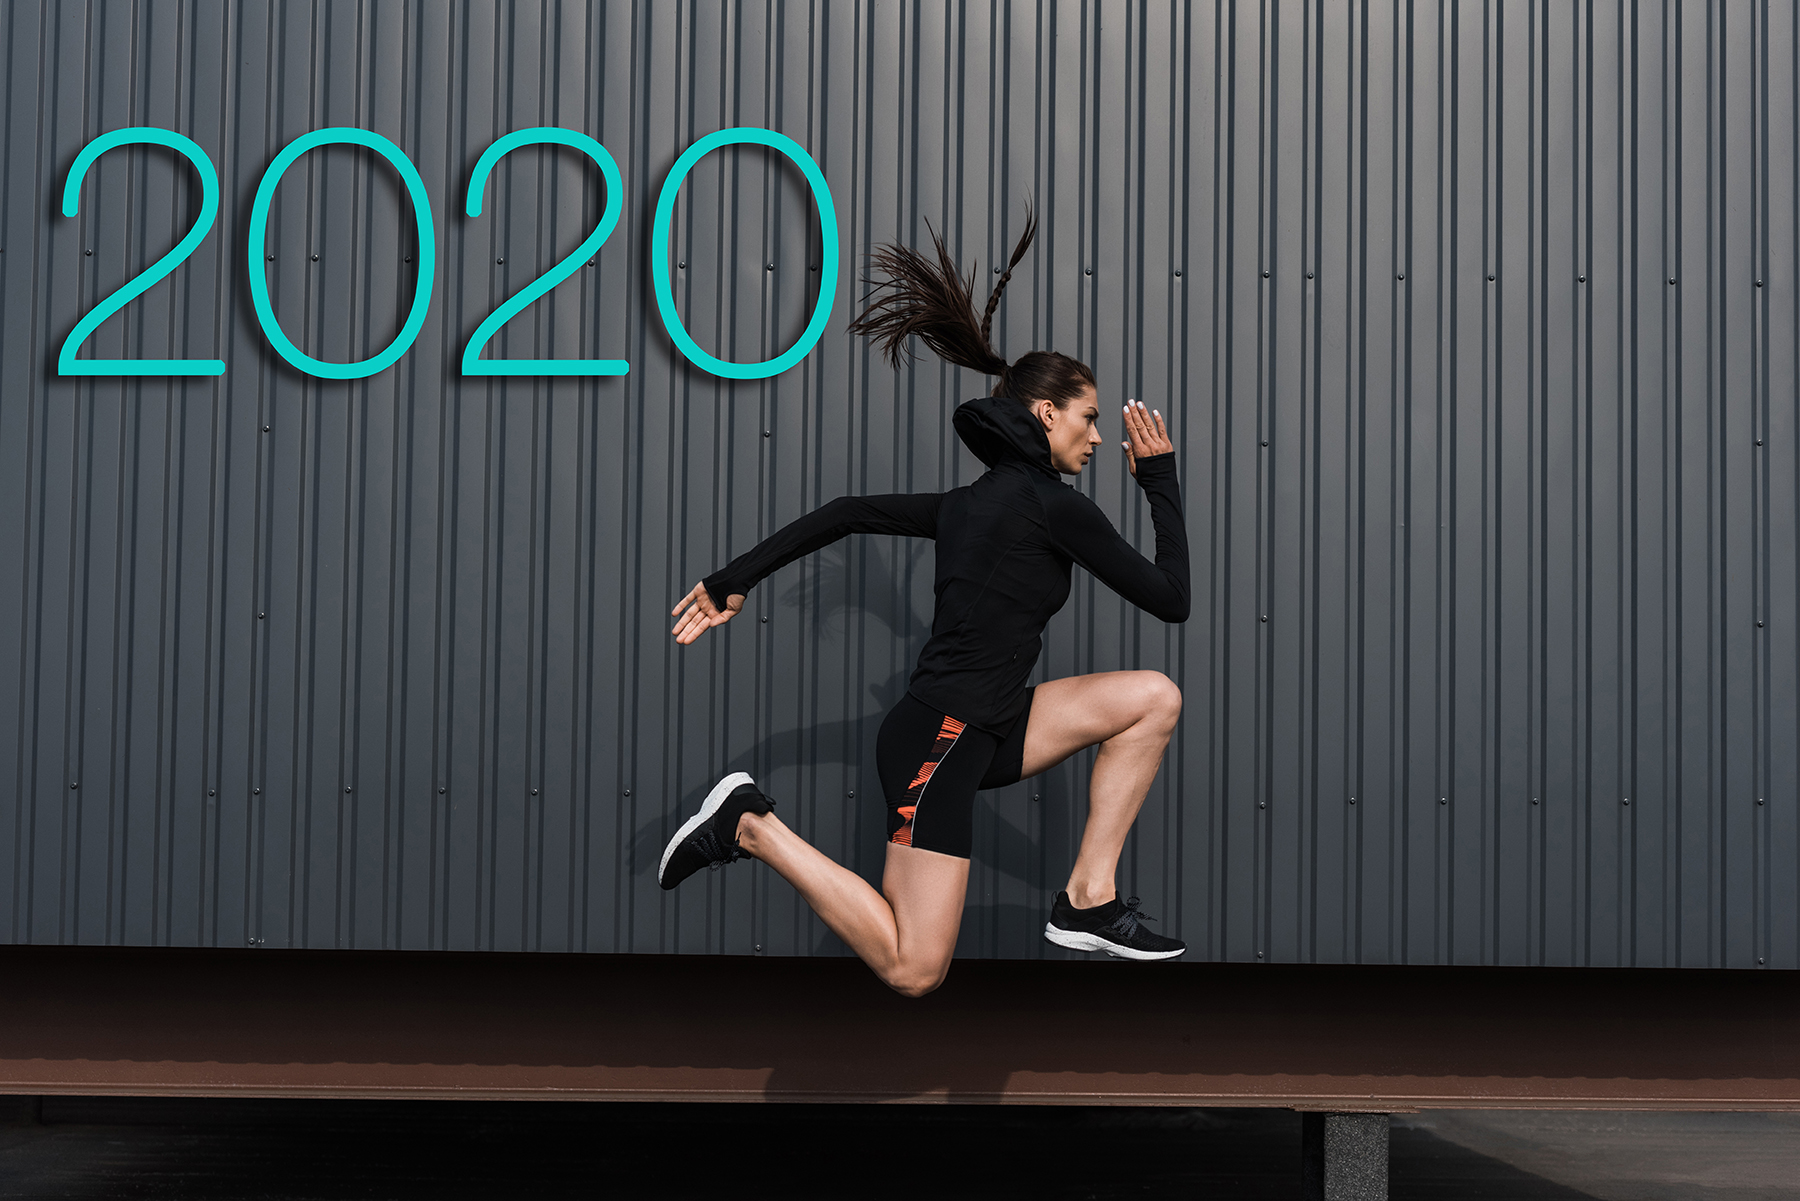 2020 fitness woman running